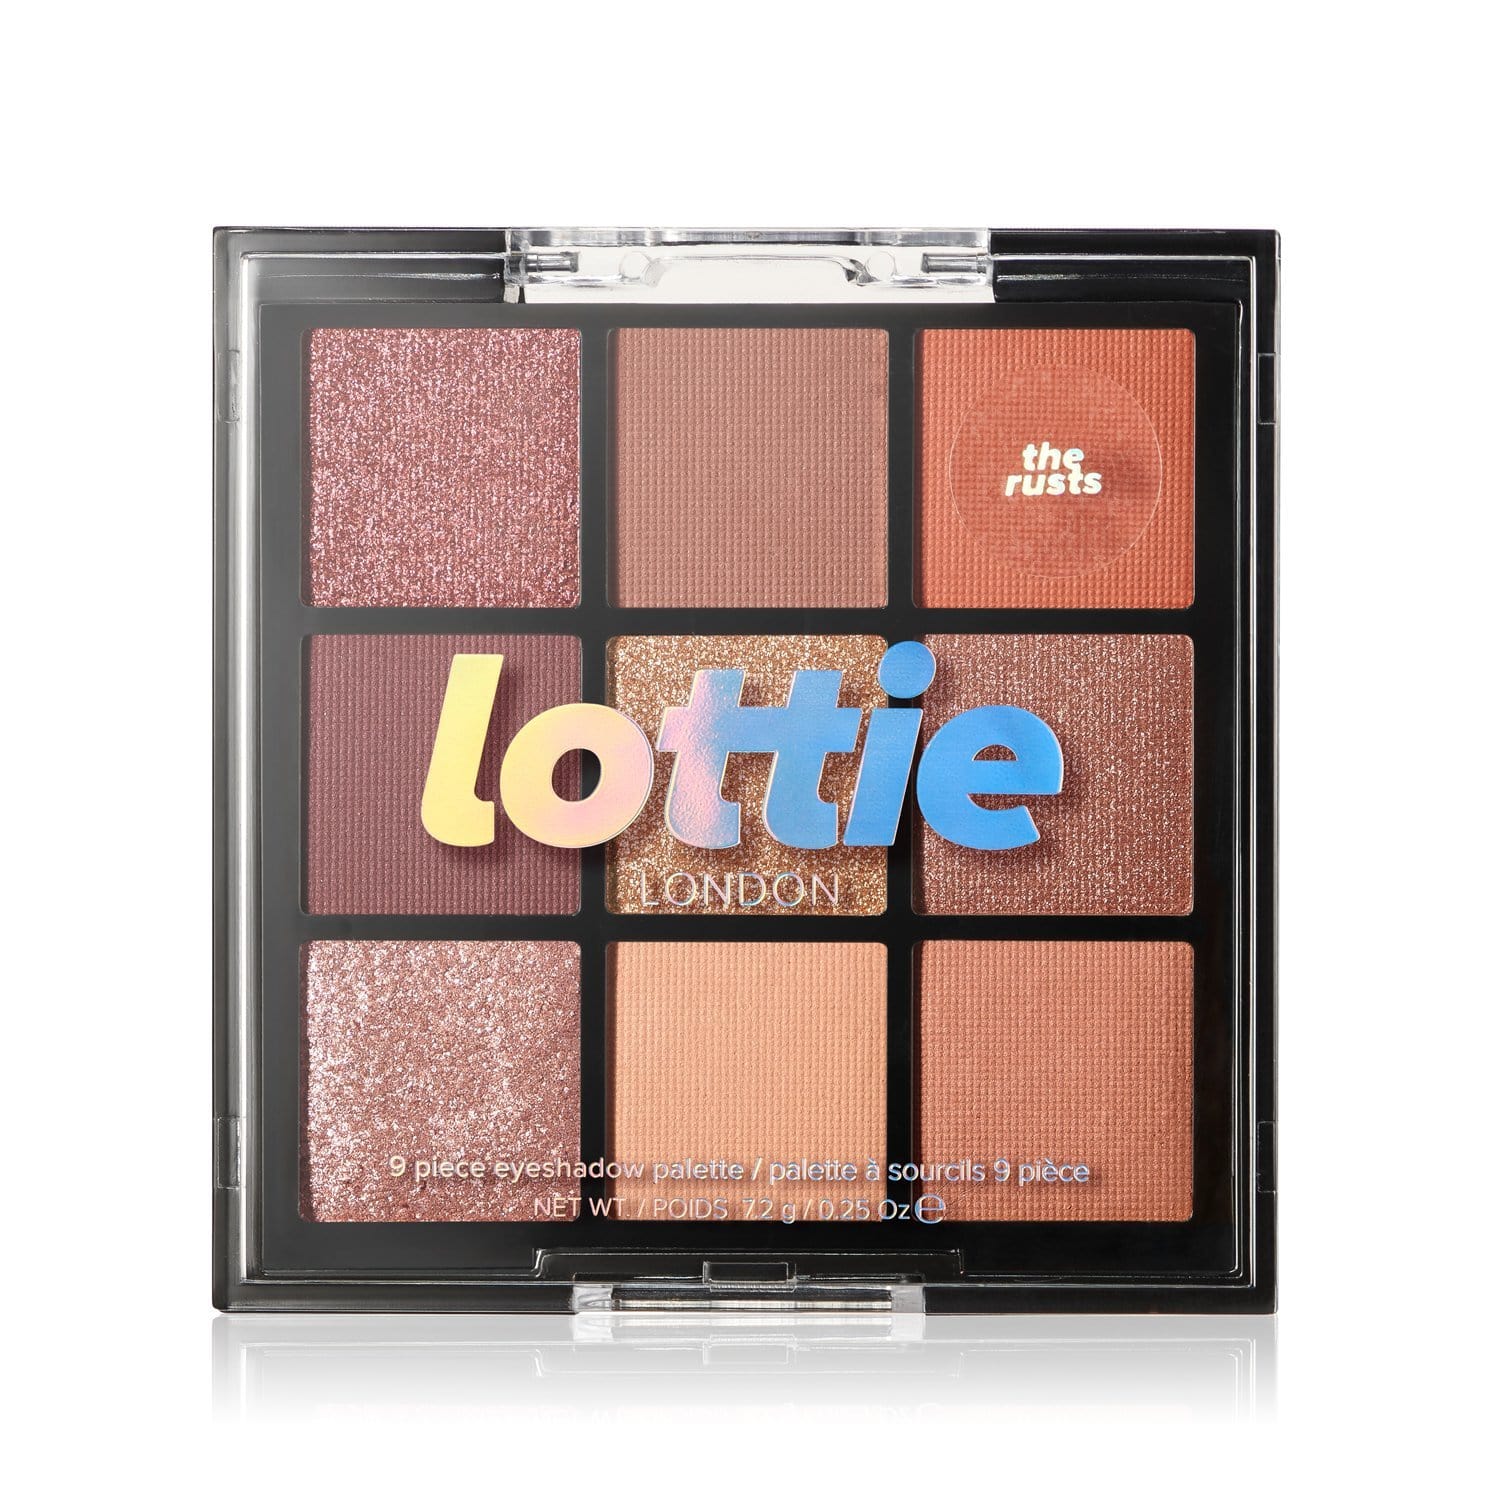 lottie palette - the rusts Makeup 9 shade eyeshadow palette